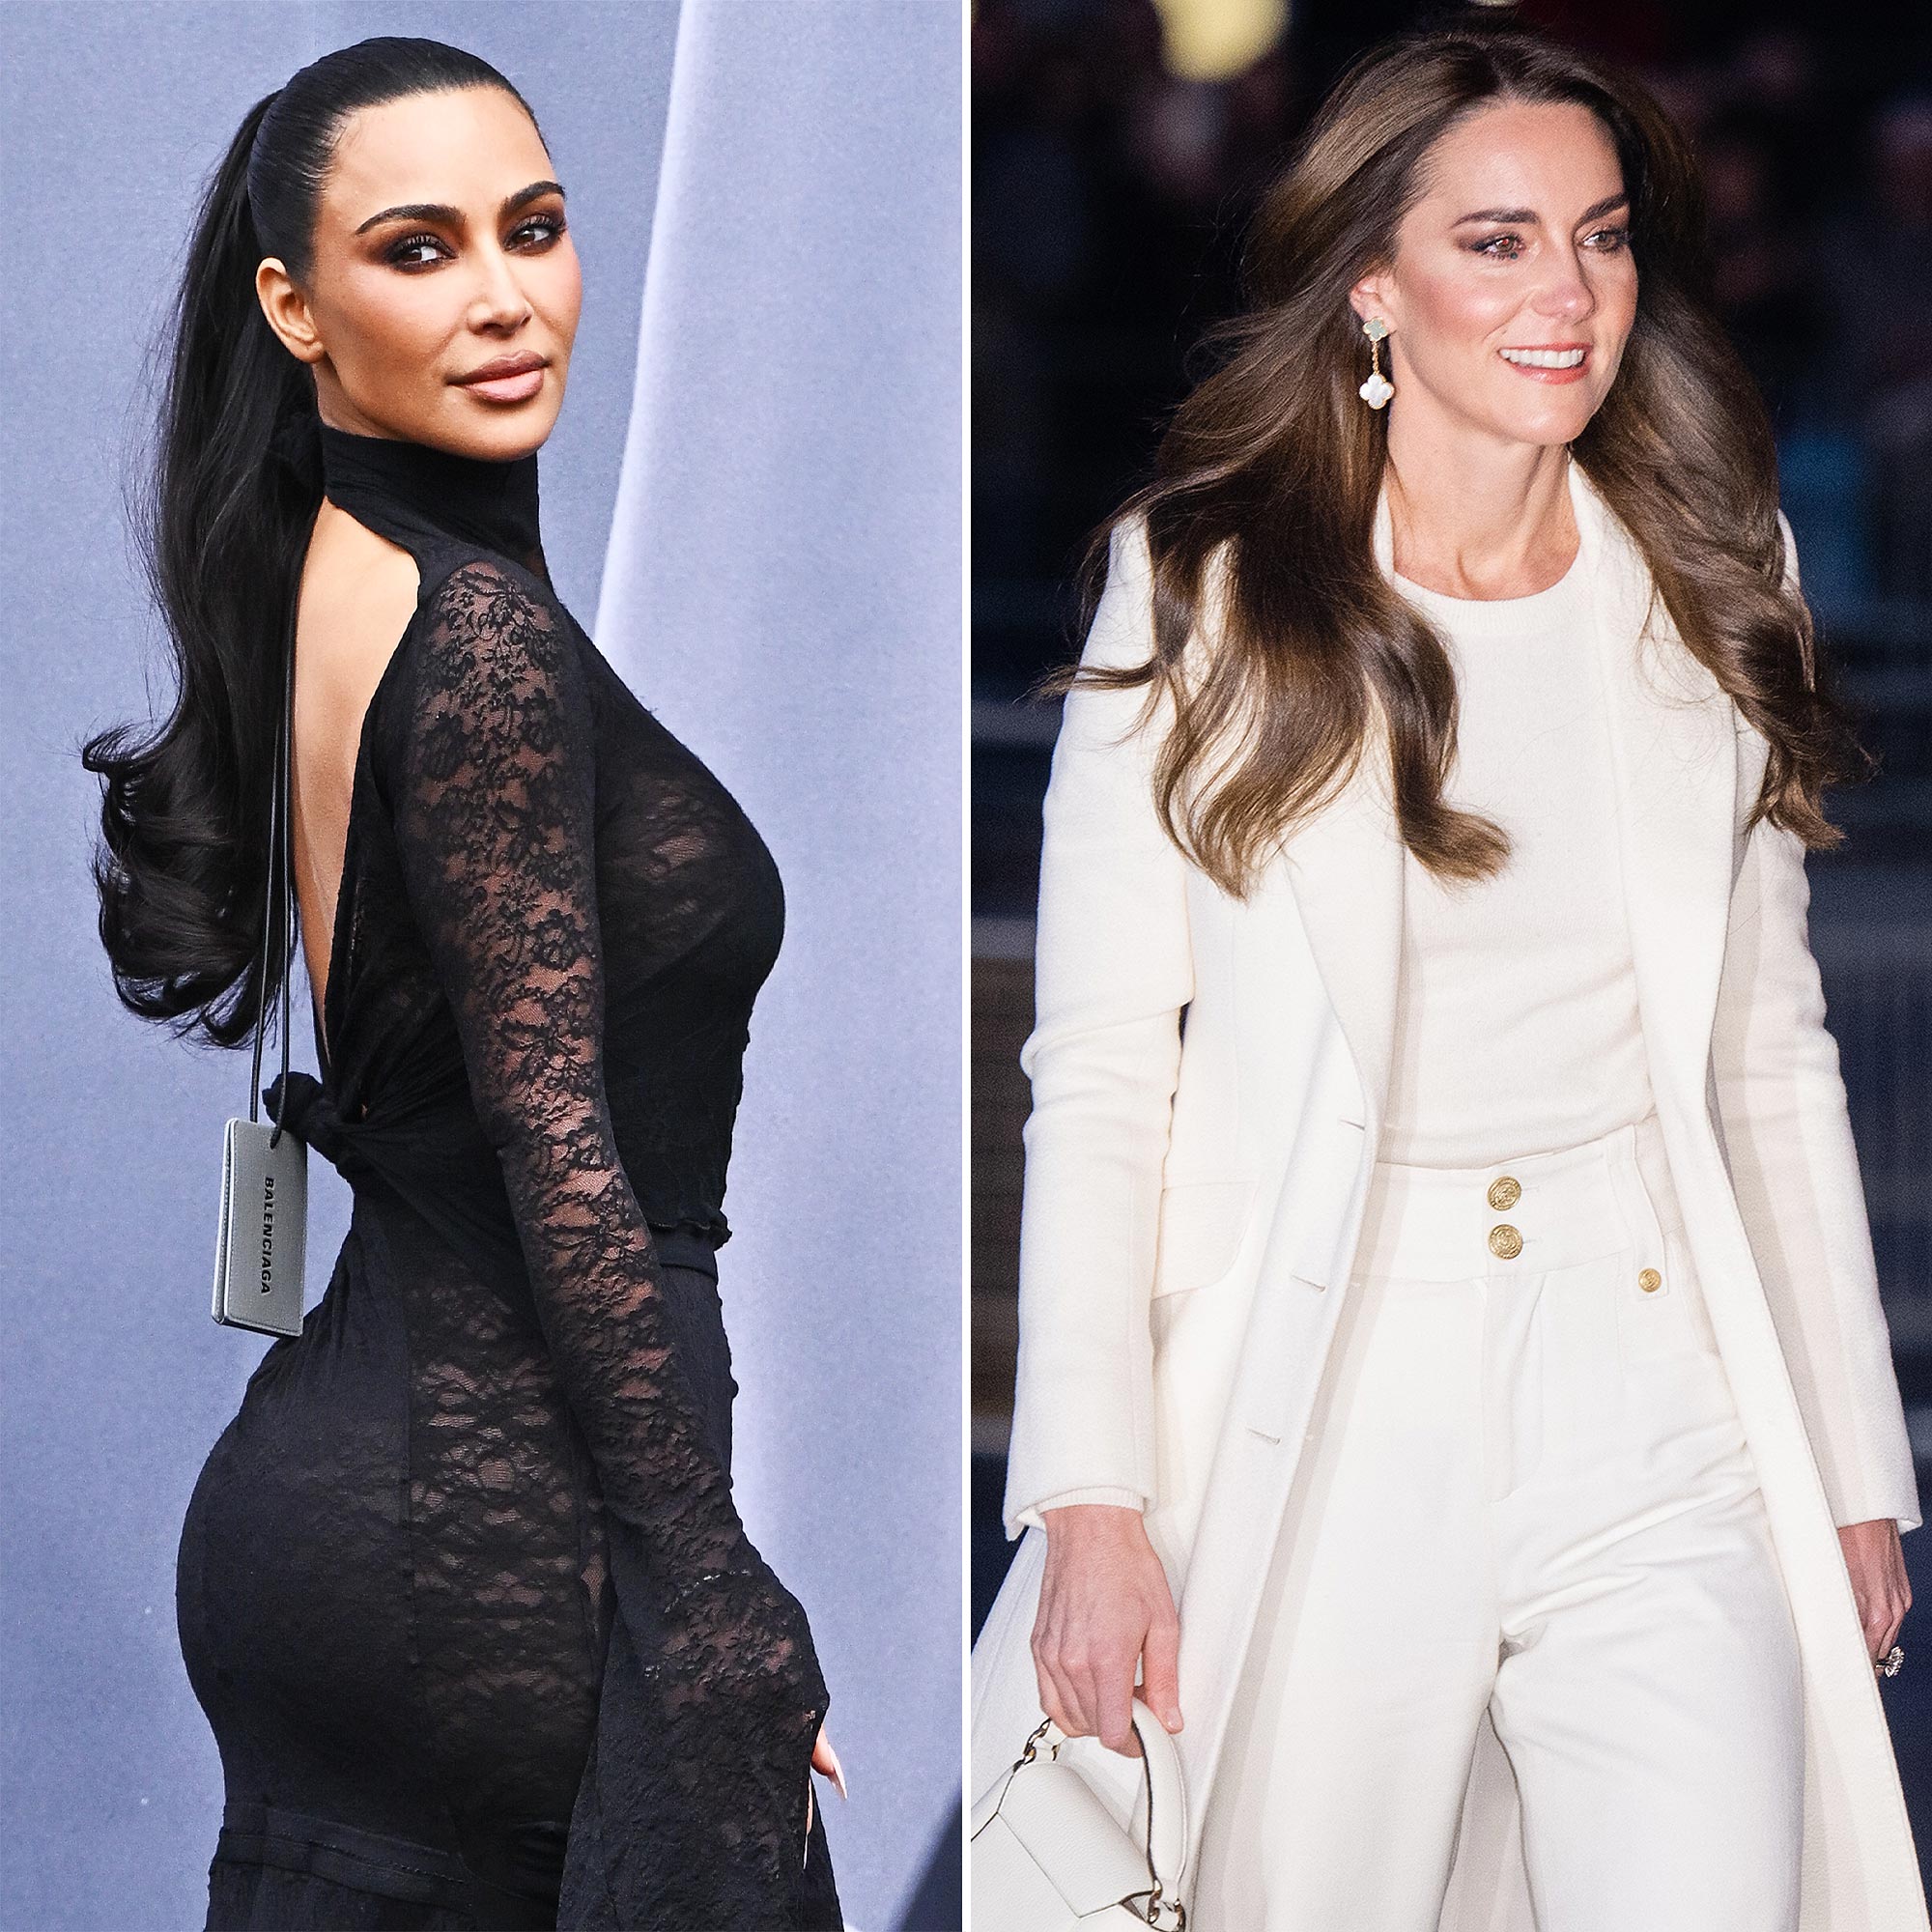 Kim Kardashian Jokes She's Going to 'Find' Kate Middleton | Us Weekly